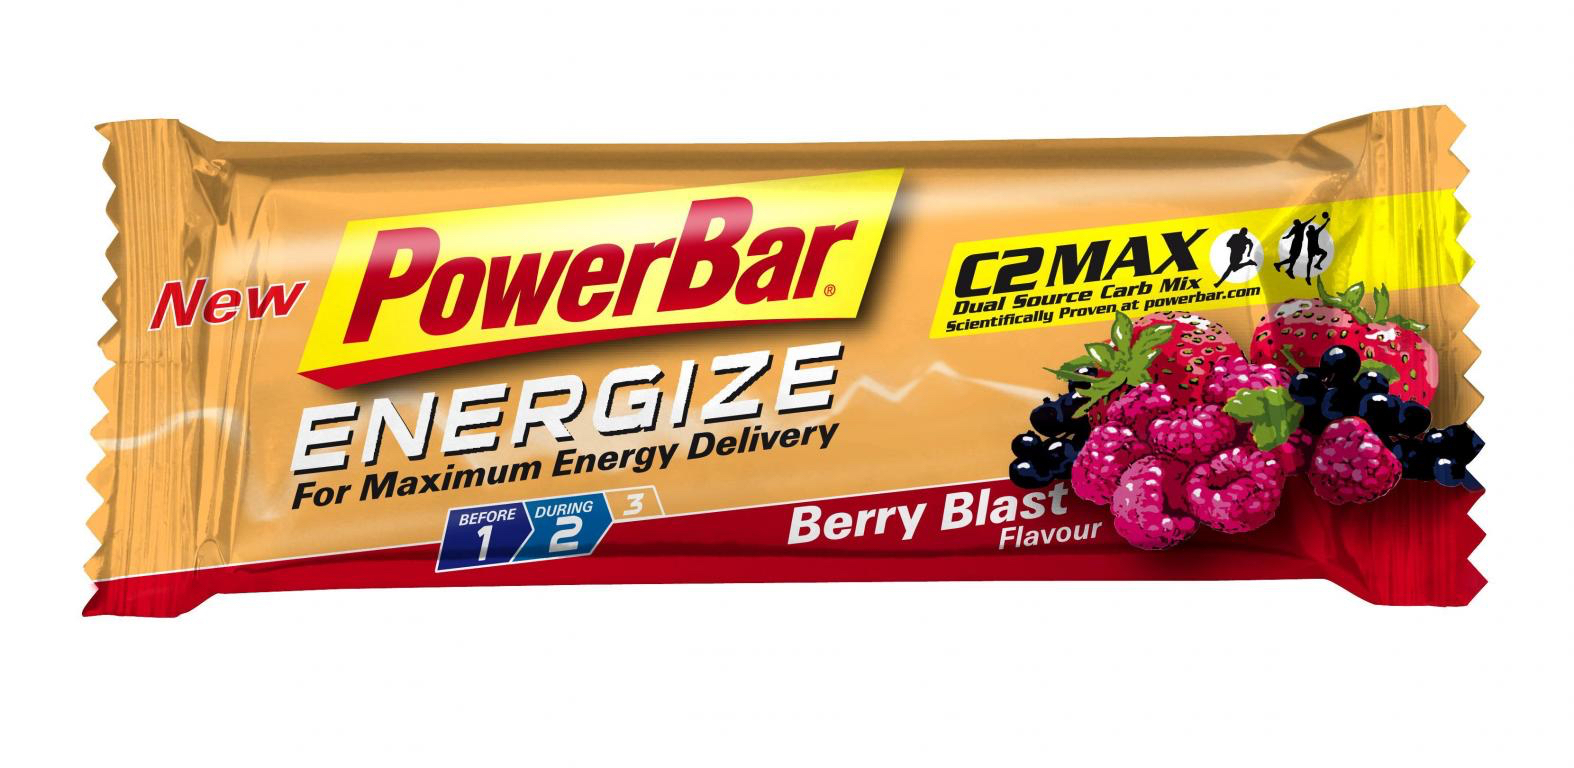 Powerbar Energize